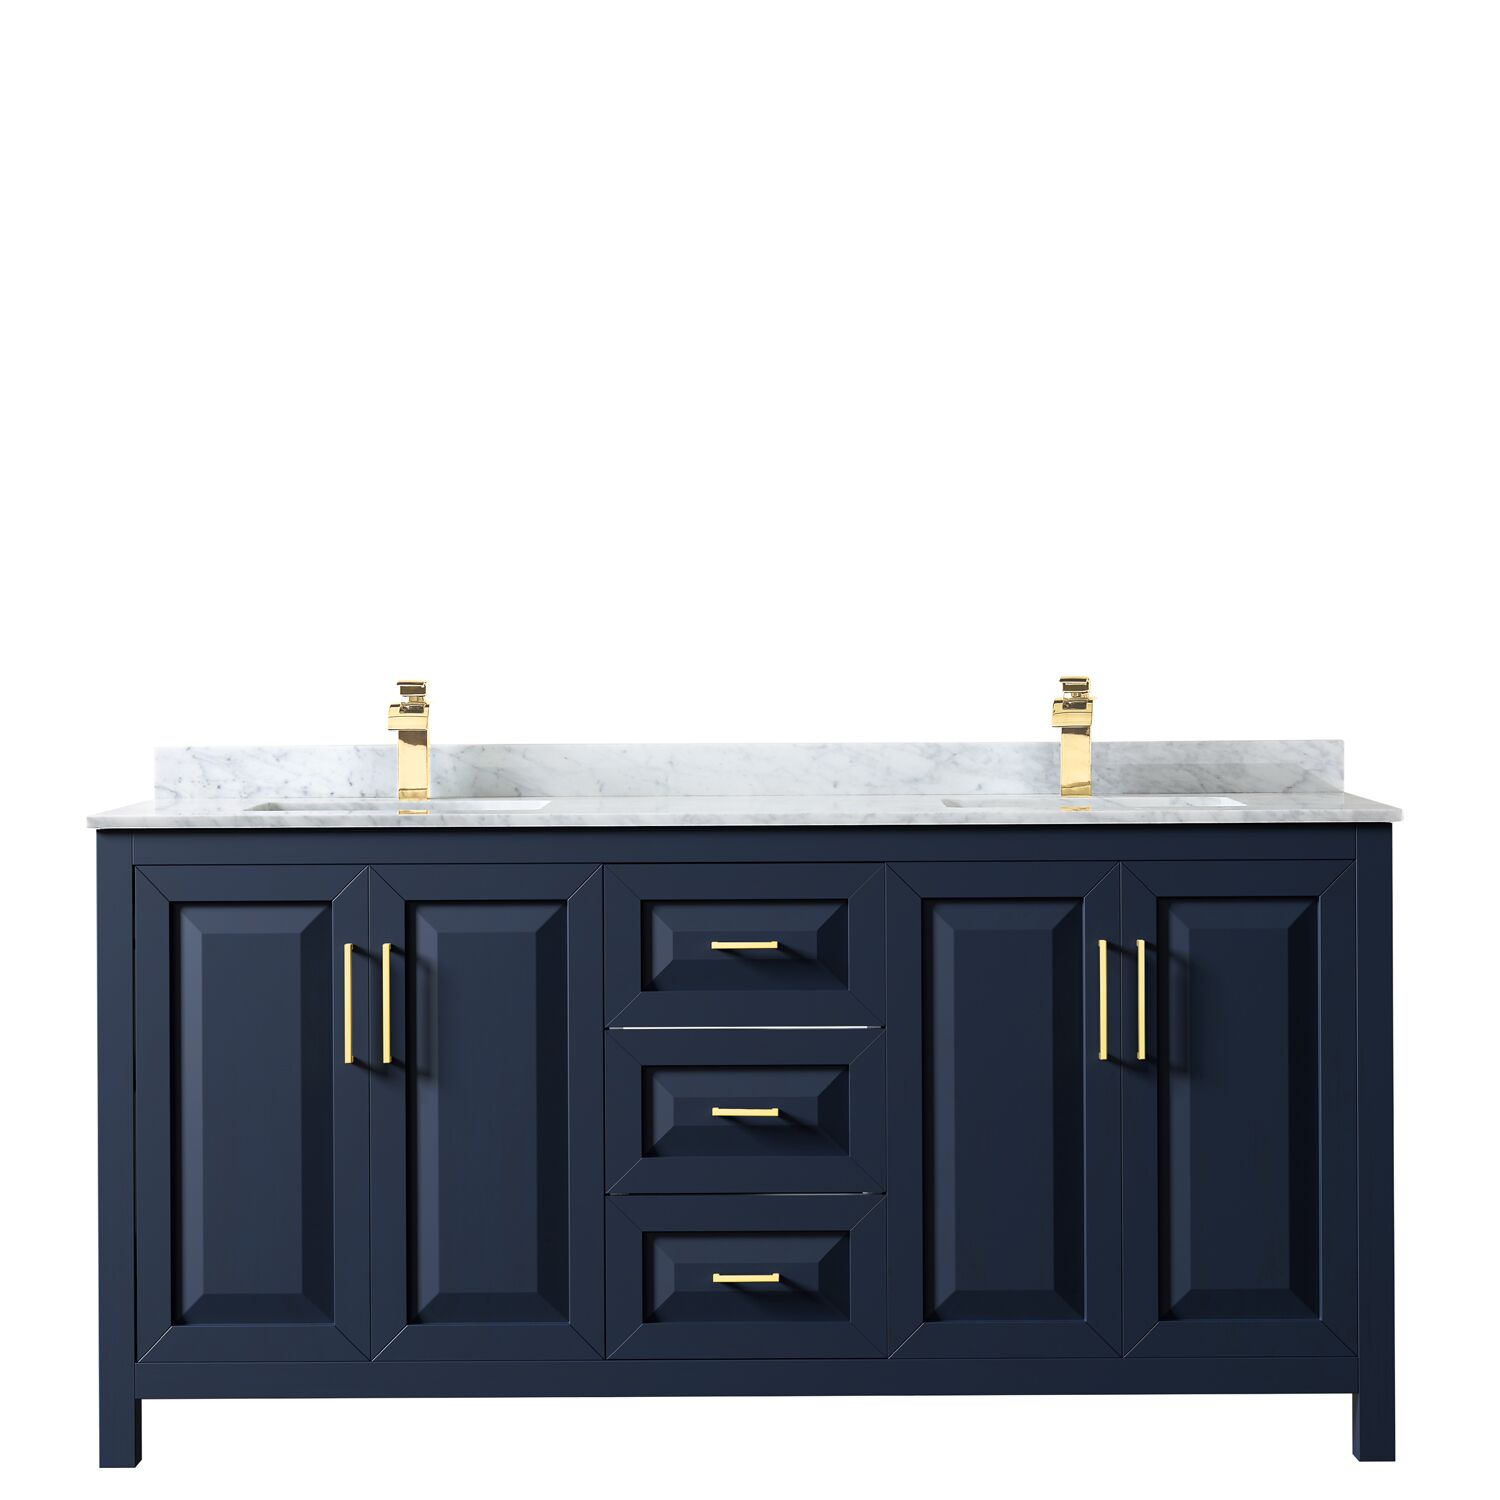 72" Double Bathroom Vanity in Dark Blue with Countertop, Mirror and Medicine Cabinet Options